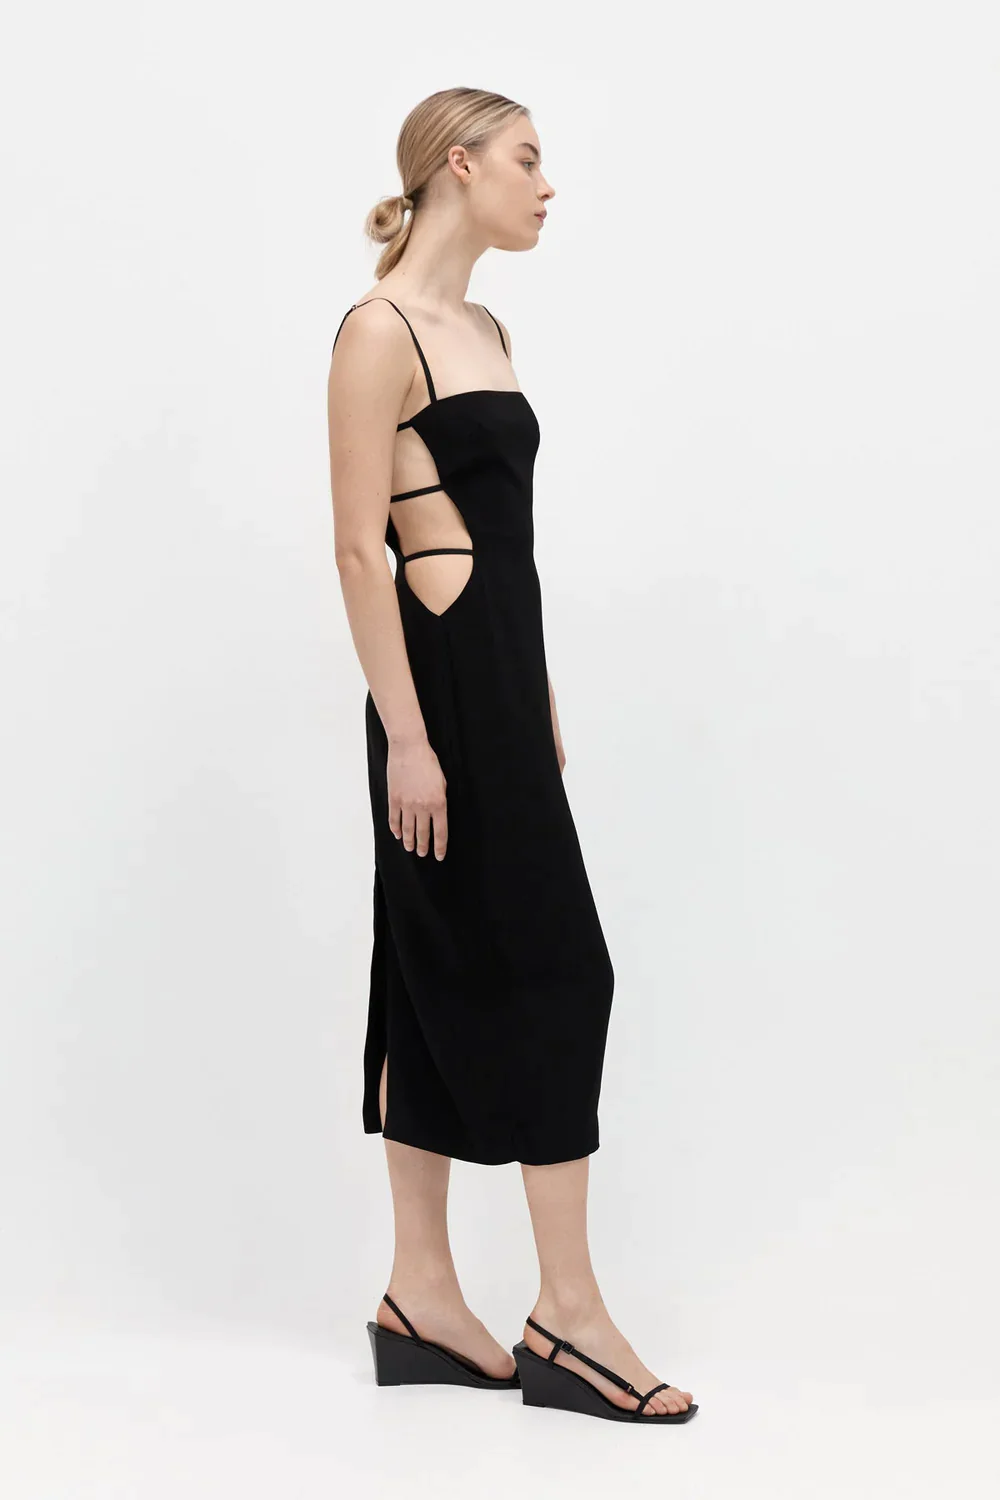 Product Image for Urbain Midi Dress, Black